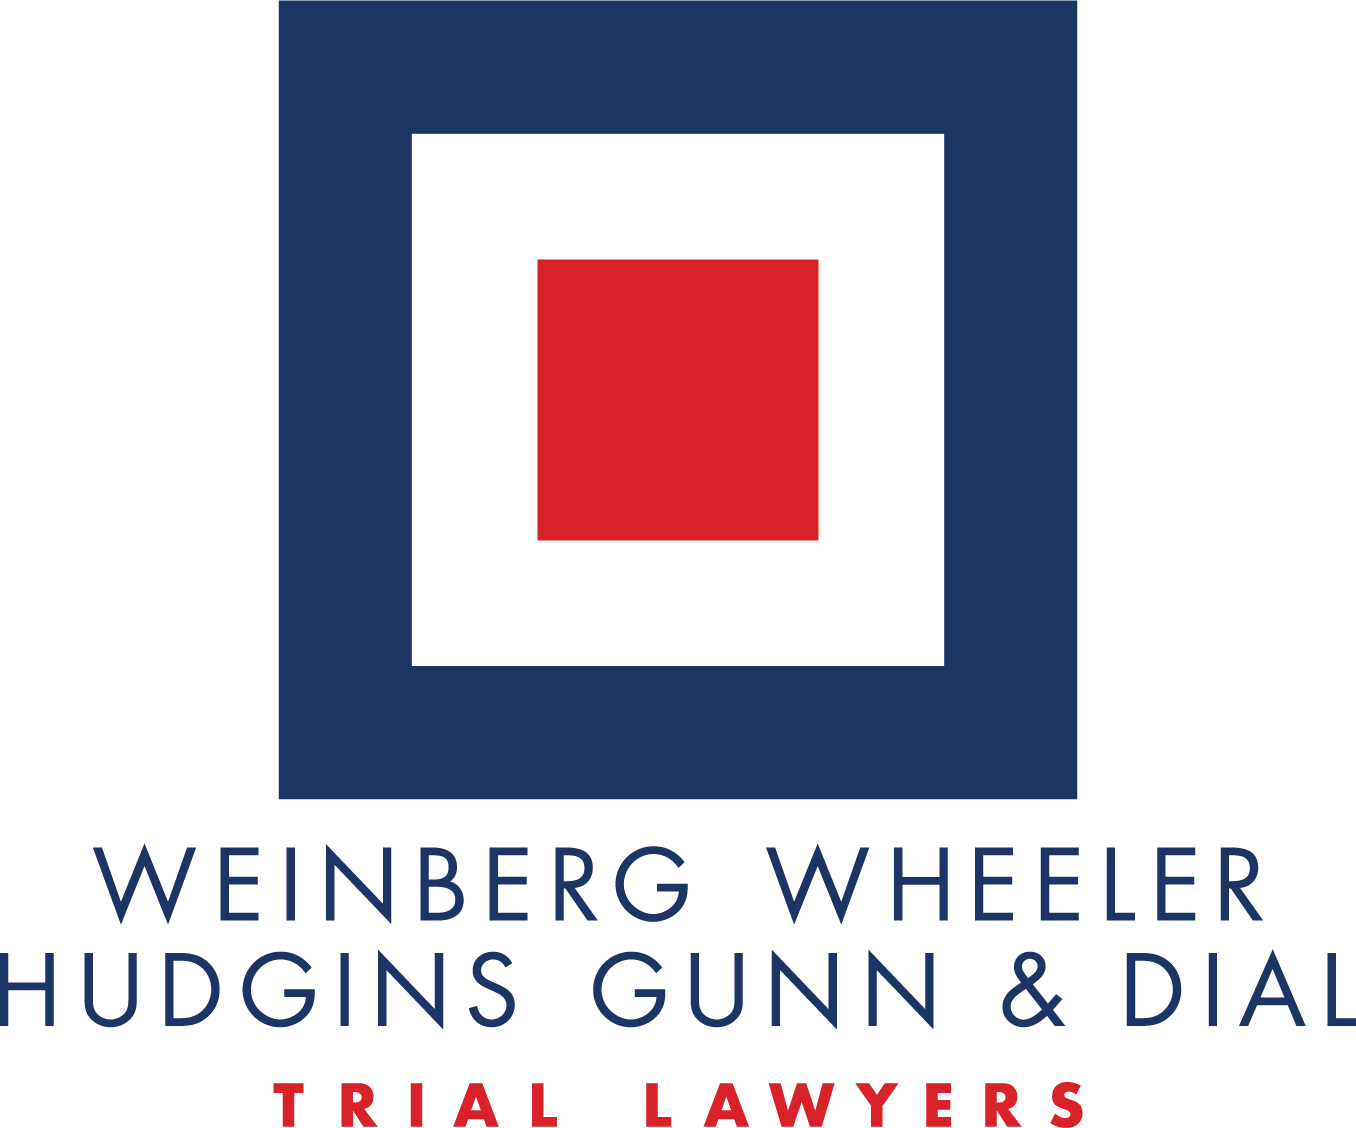 Weinberg Wheeler Hudgins Gunn & Dial Trial Lawyers